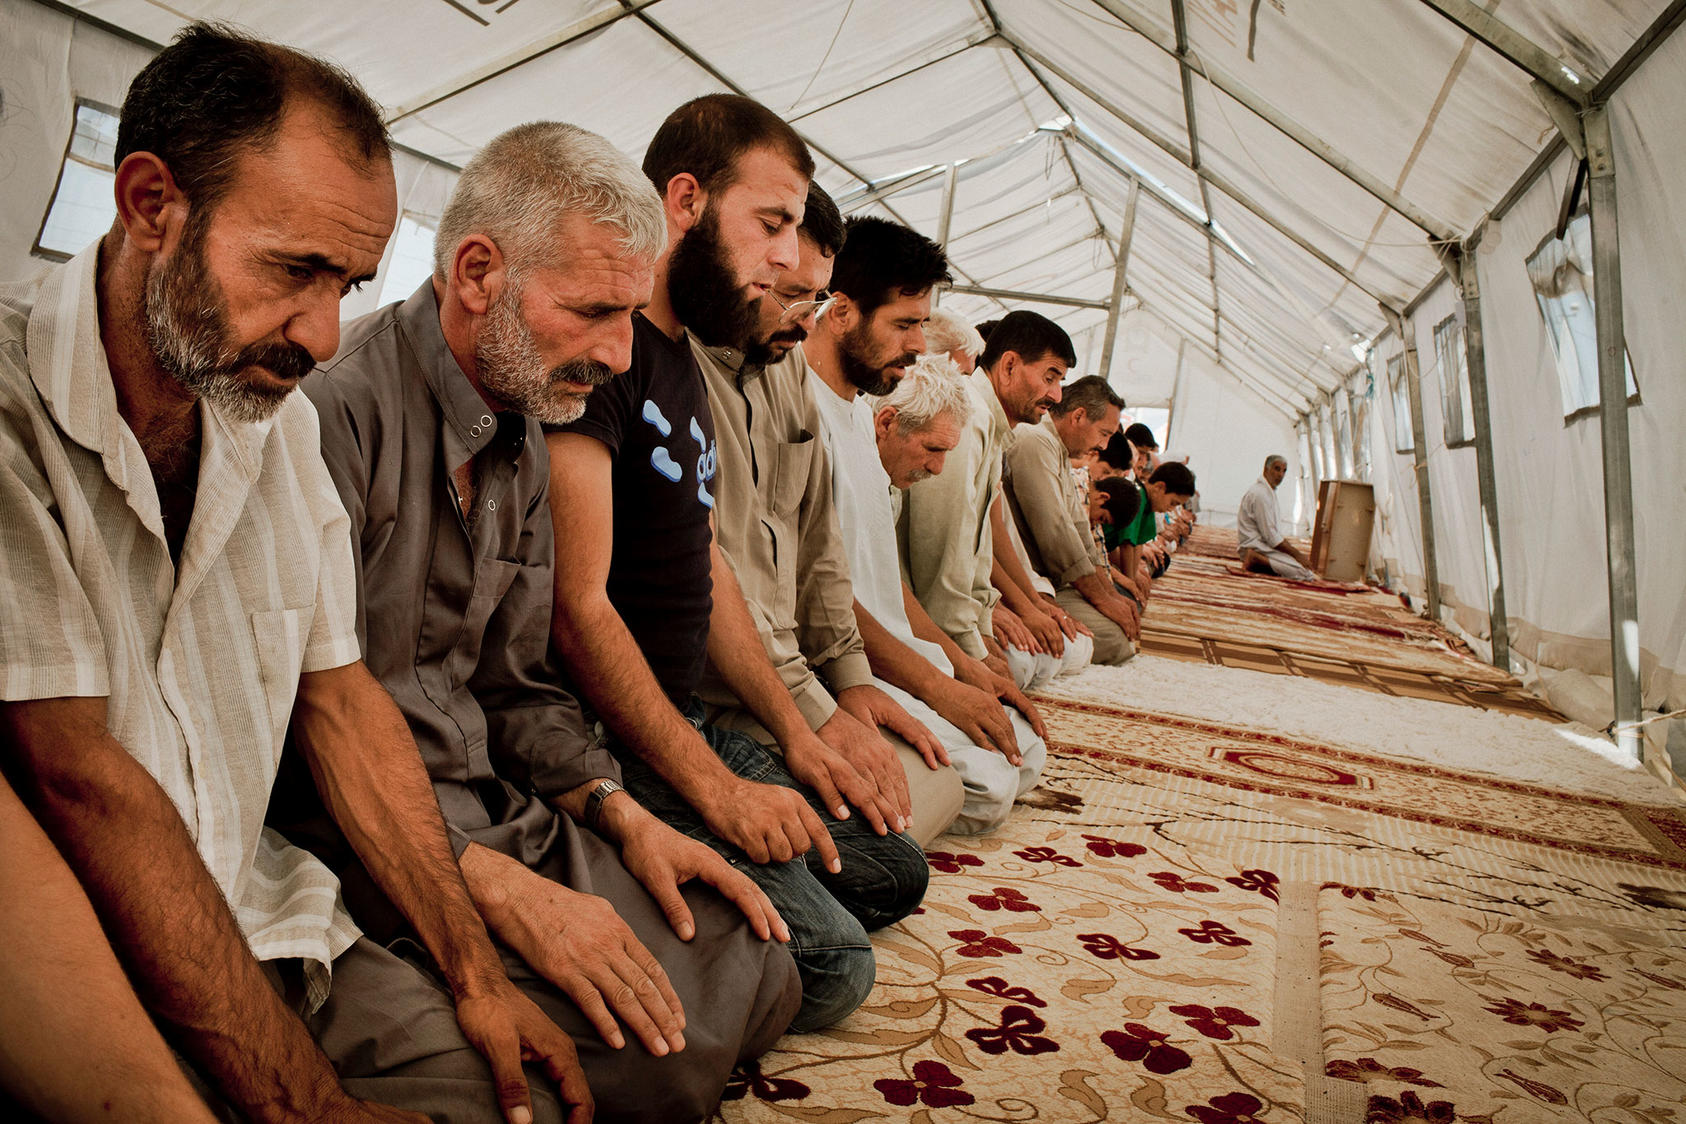 Syrian men praying at a tent encampment for Syrian refugees, in Islahiye, Turkey. July 15, 2012. (Tomas Munita/The New York Times)